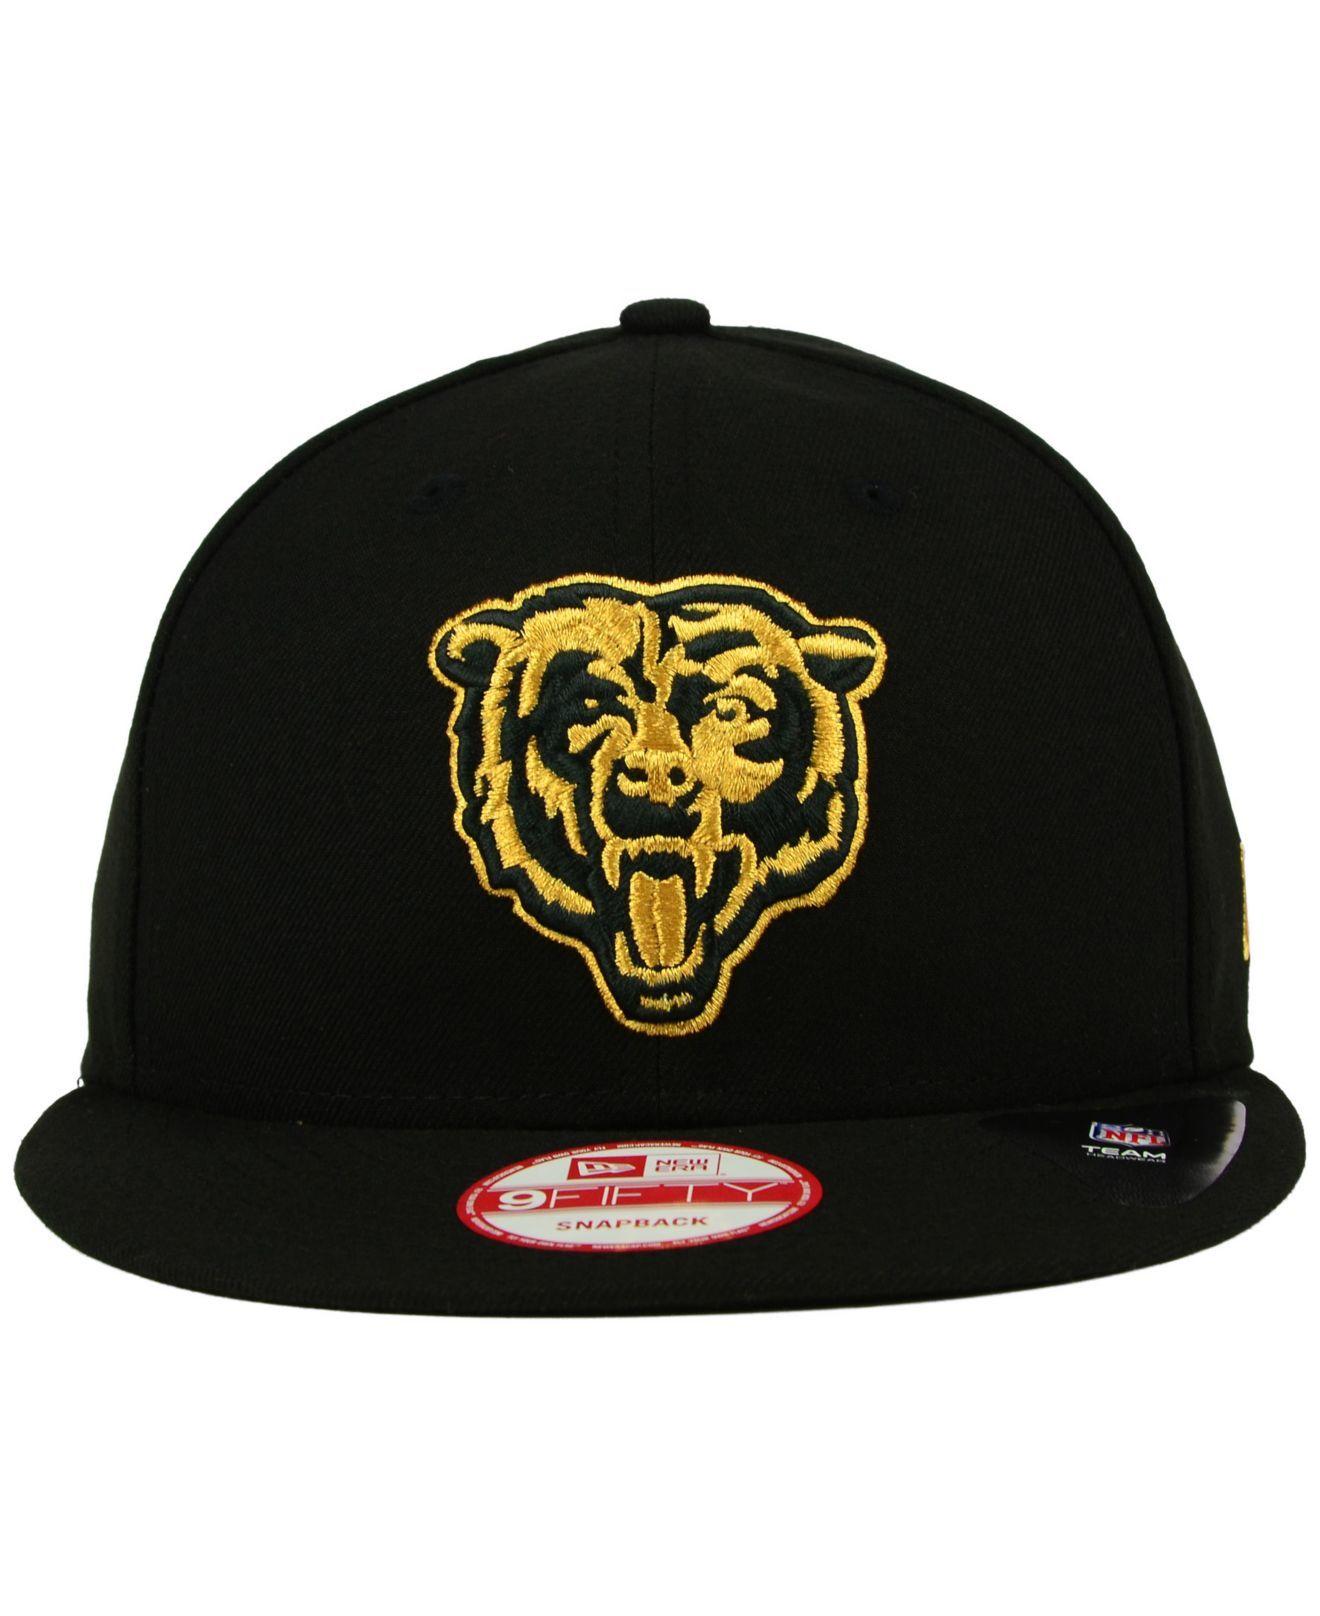 Gold Bears Logo - Lyst - KTZ Chicago Bears Black Metallic Gold 9fifty Snapback Cap in ...